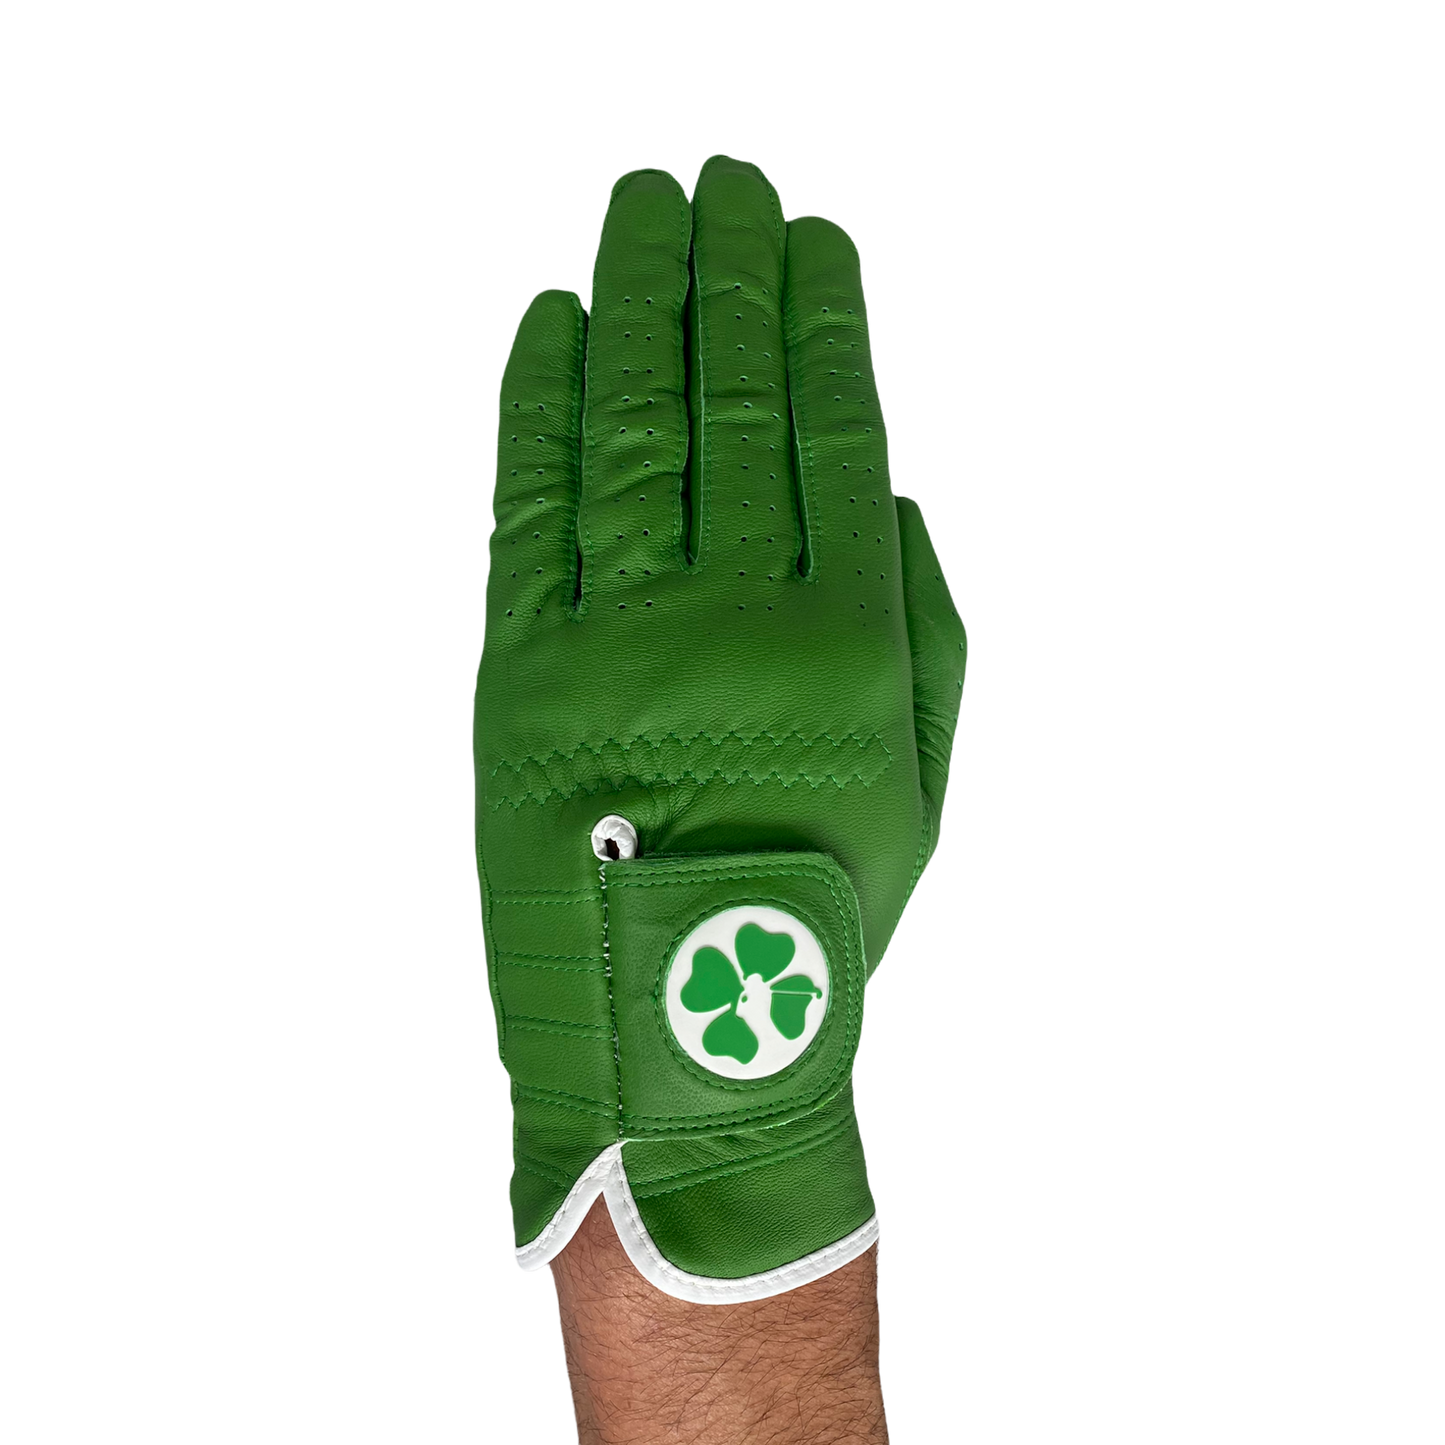 Performance Tour Glove - Green